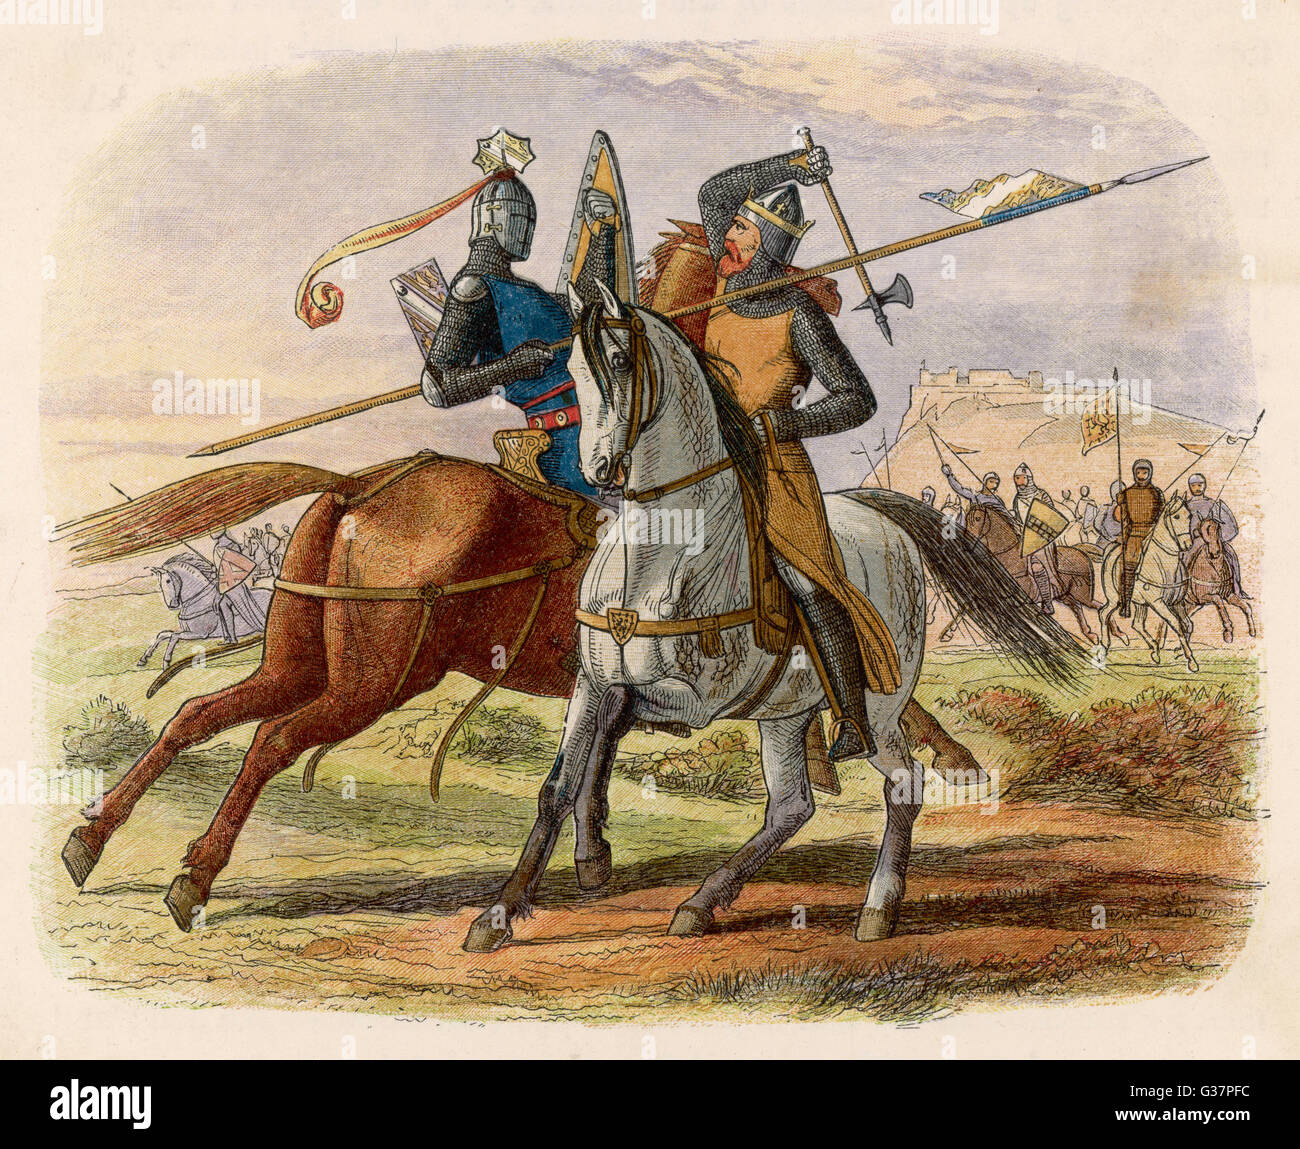 Vor der Schlacht tötet König Robert de Bruce VIII Sir Henry de Bohun im Kampf Einzeldatum: 23 Juni 1314 Stockfoto